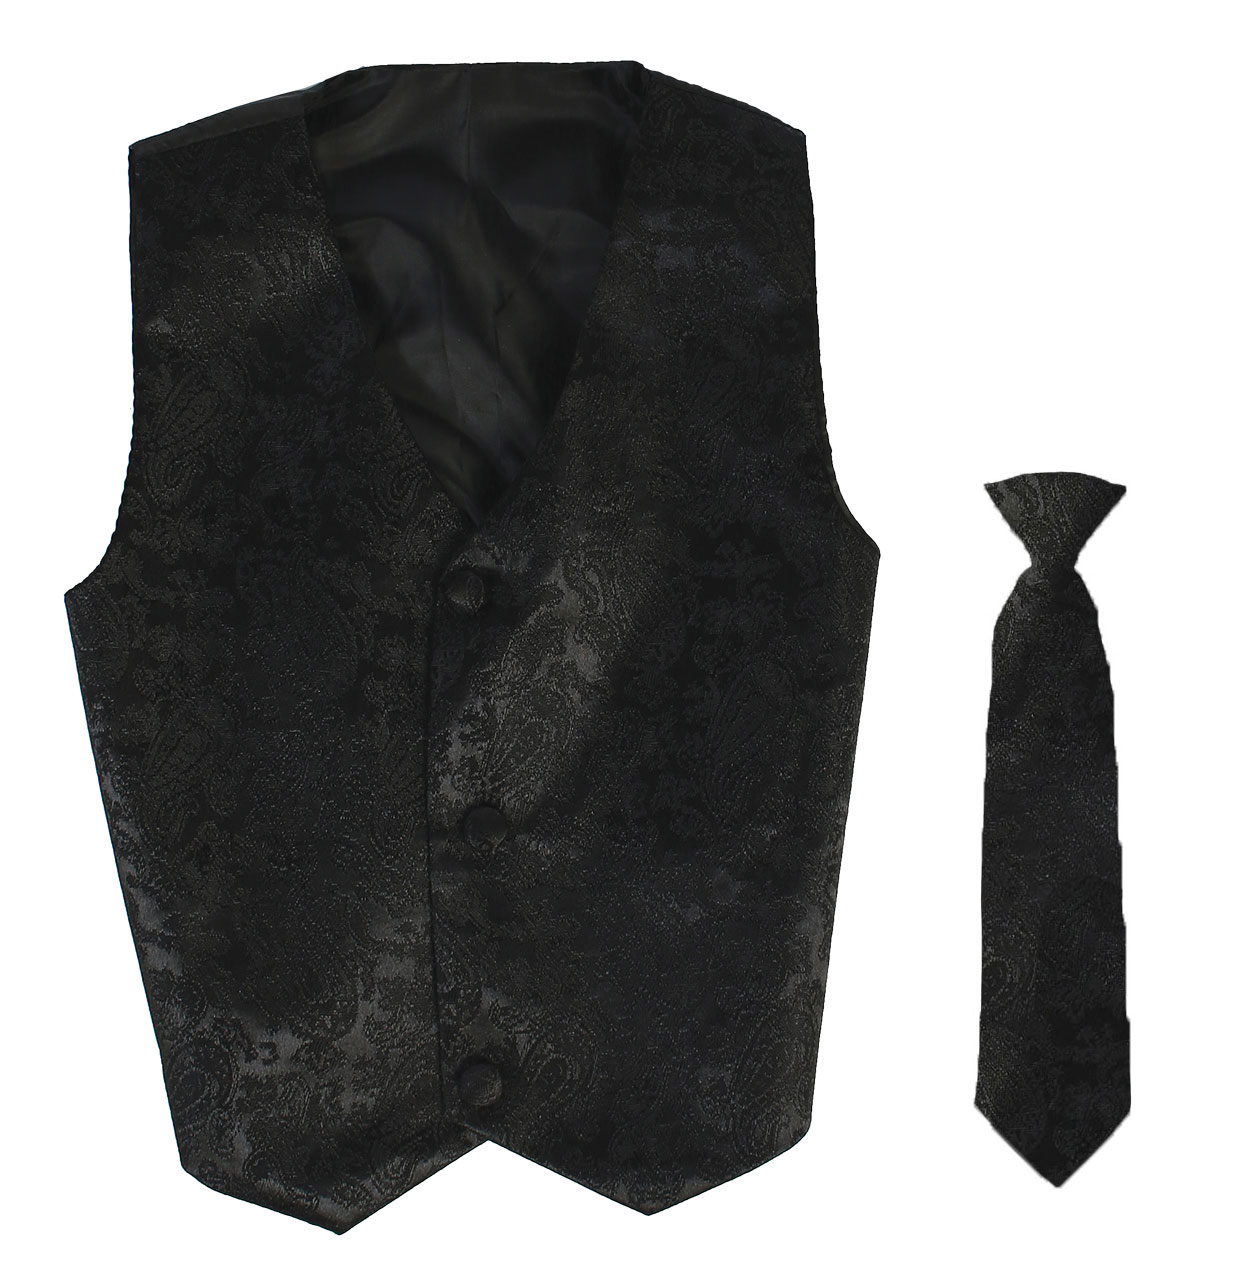 Vest and Clip On Boy Necktie set - Black Paisley - 4/5